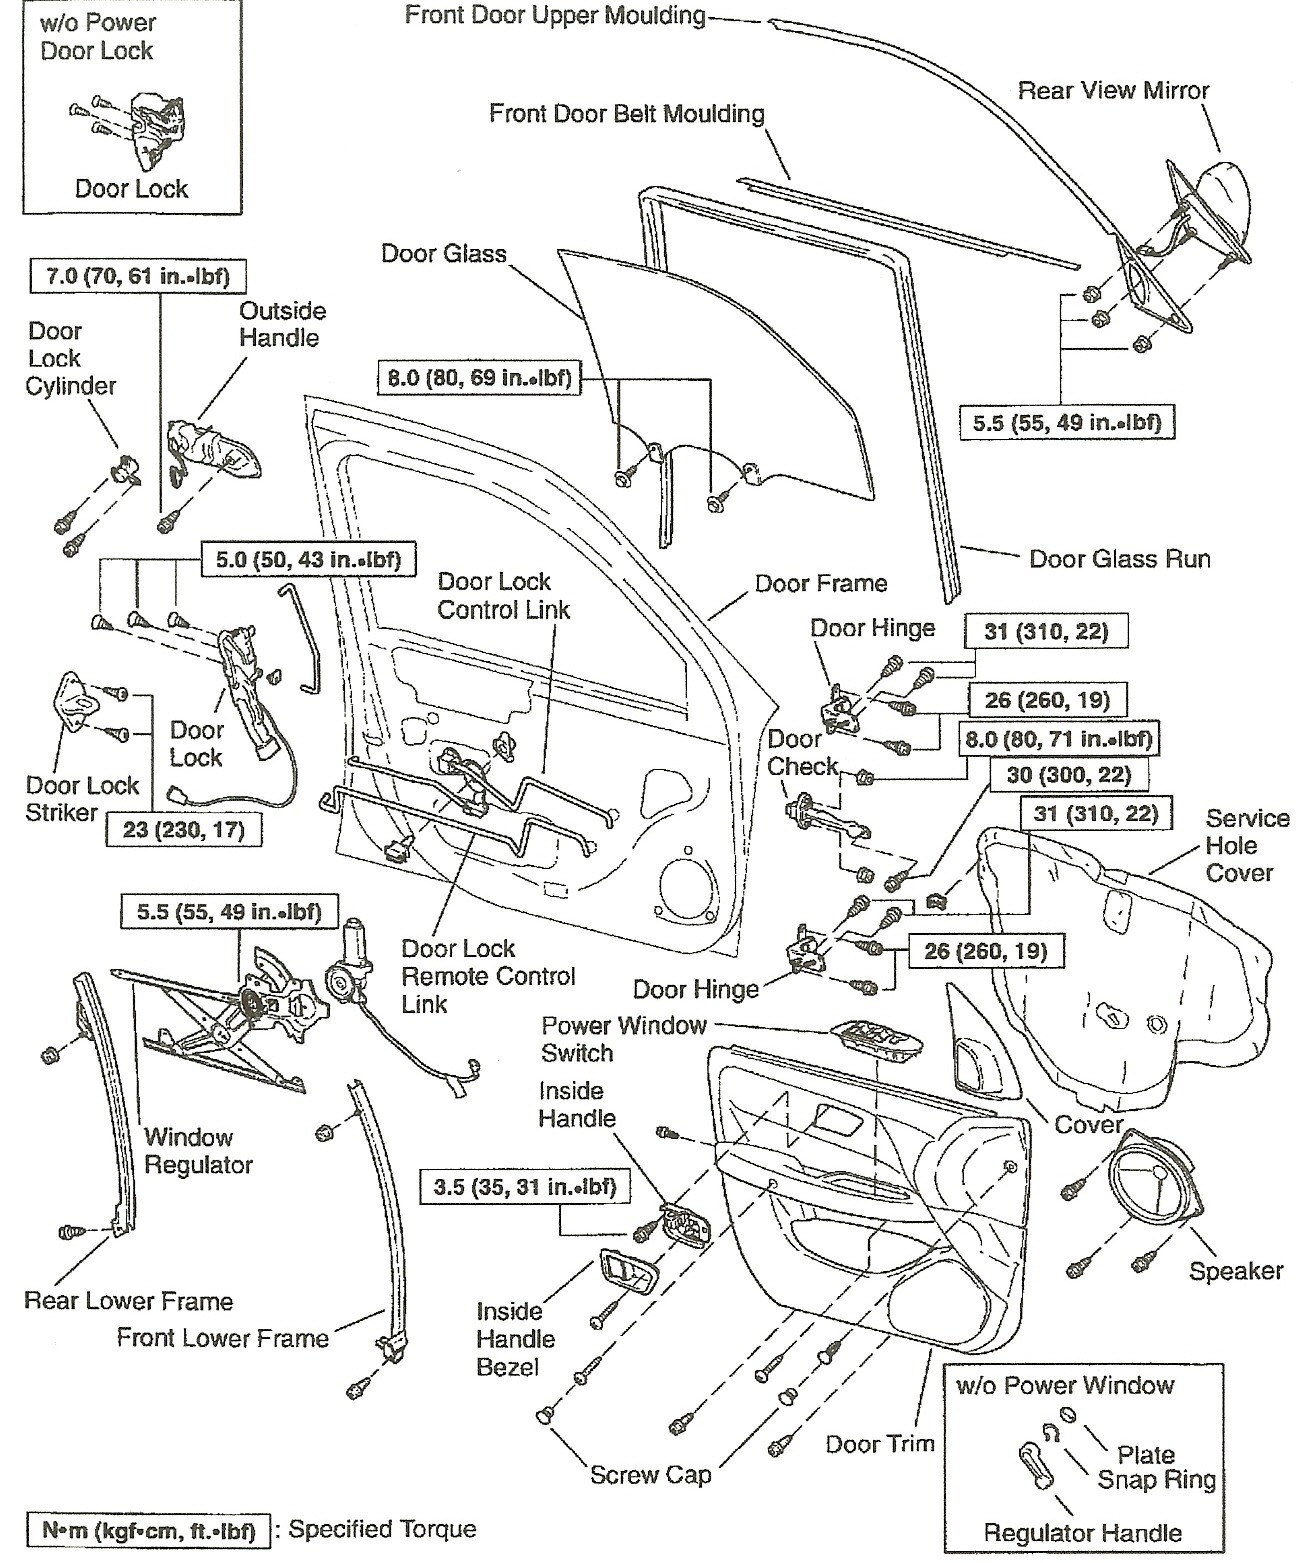 1997 toyota Camry Engine Diagram New 1997 toyota Camry Parts – Blog Car Image Of 1997 toyota Camry Engine Diagram